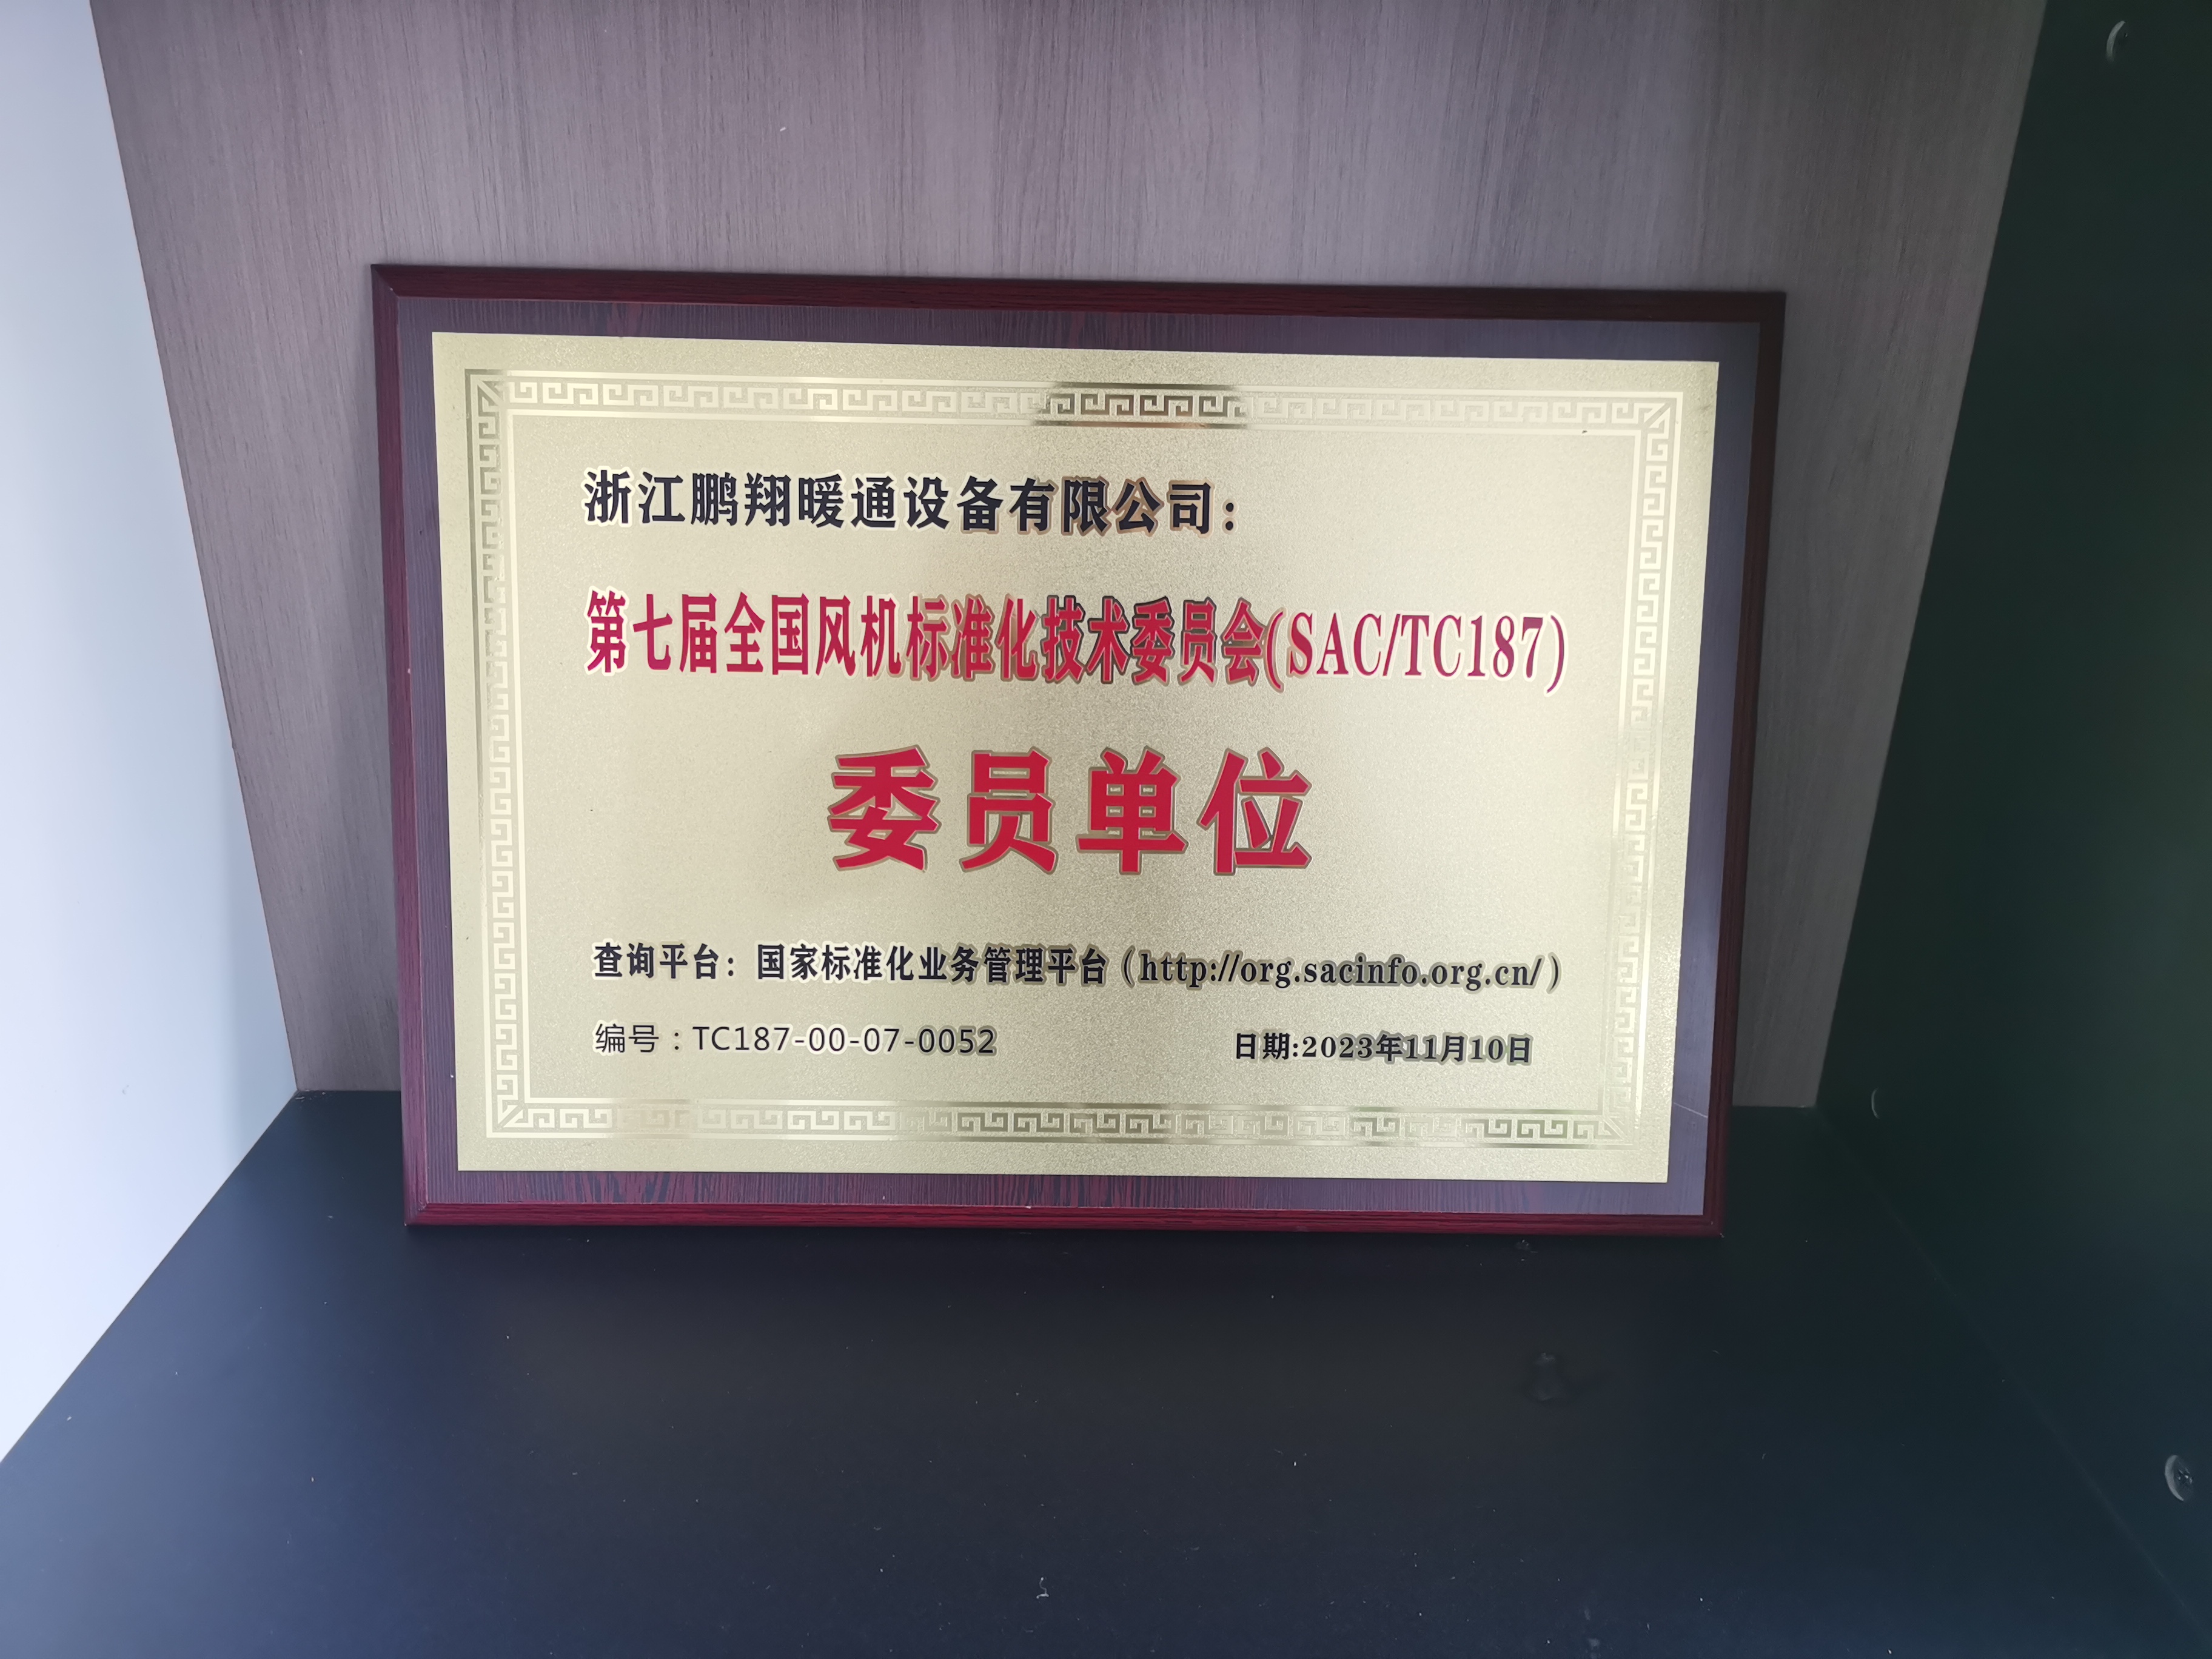 VALMET پیپر مشینری ٹیکنالوجی ٹیم نے سالانہ آڈٹ معائنہ کے دوران Zhejiang Pengxiang HVAC Equipment Co., Ltd کو سب سے زیادہ درجہ بندی دی۔